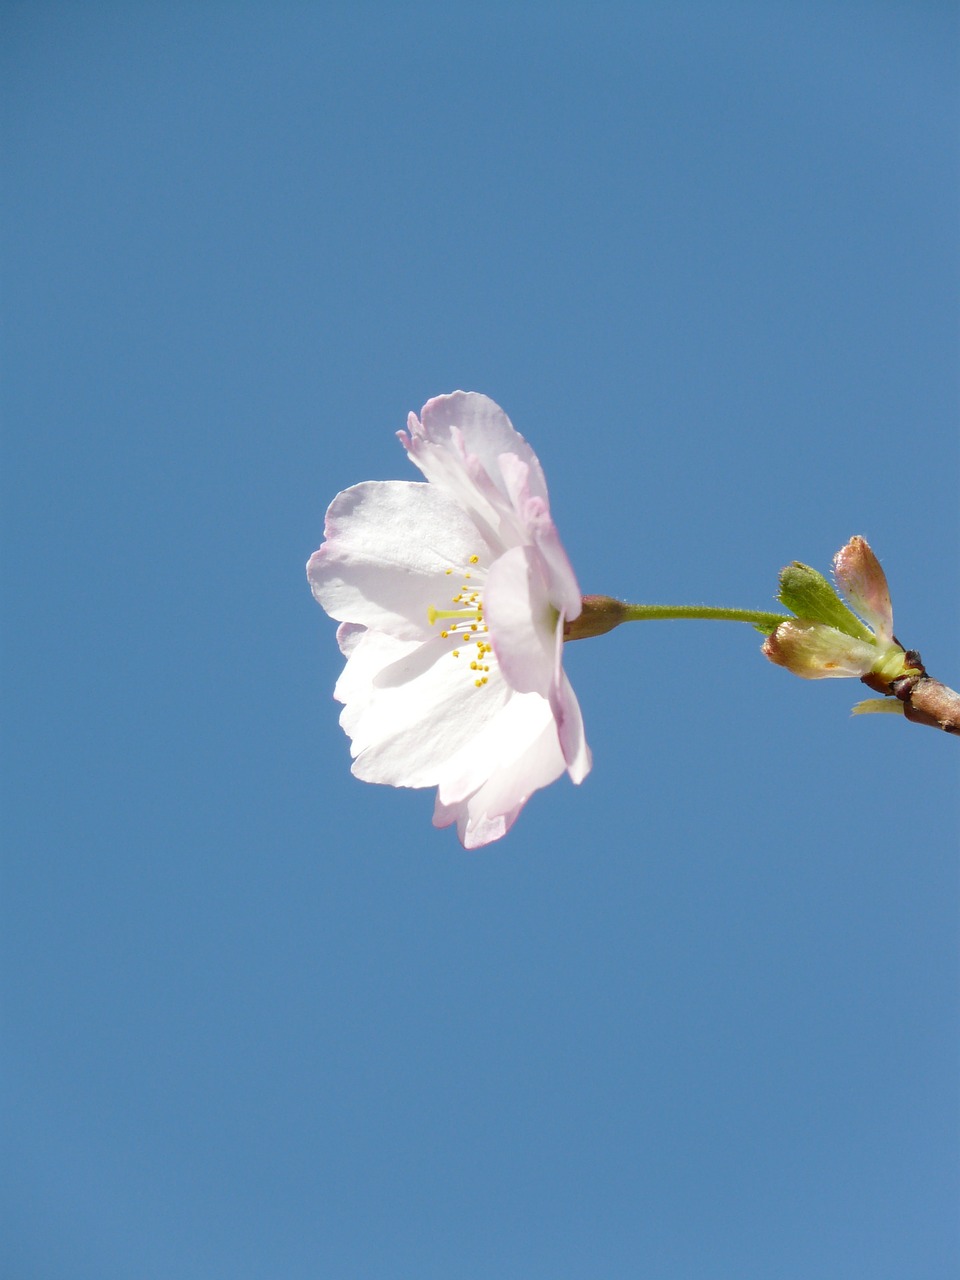 ornamental cherry blossom bloom free photo